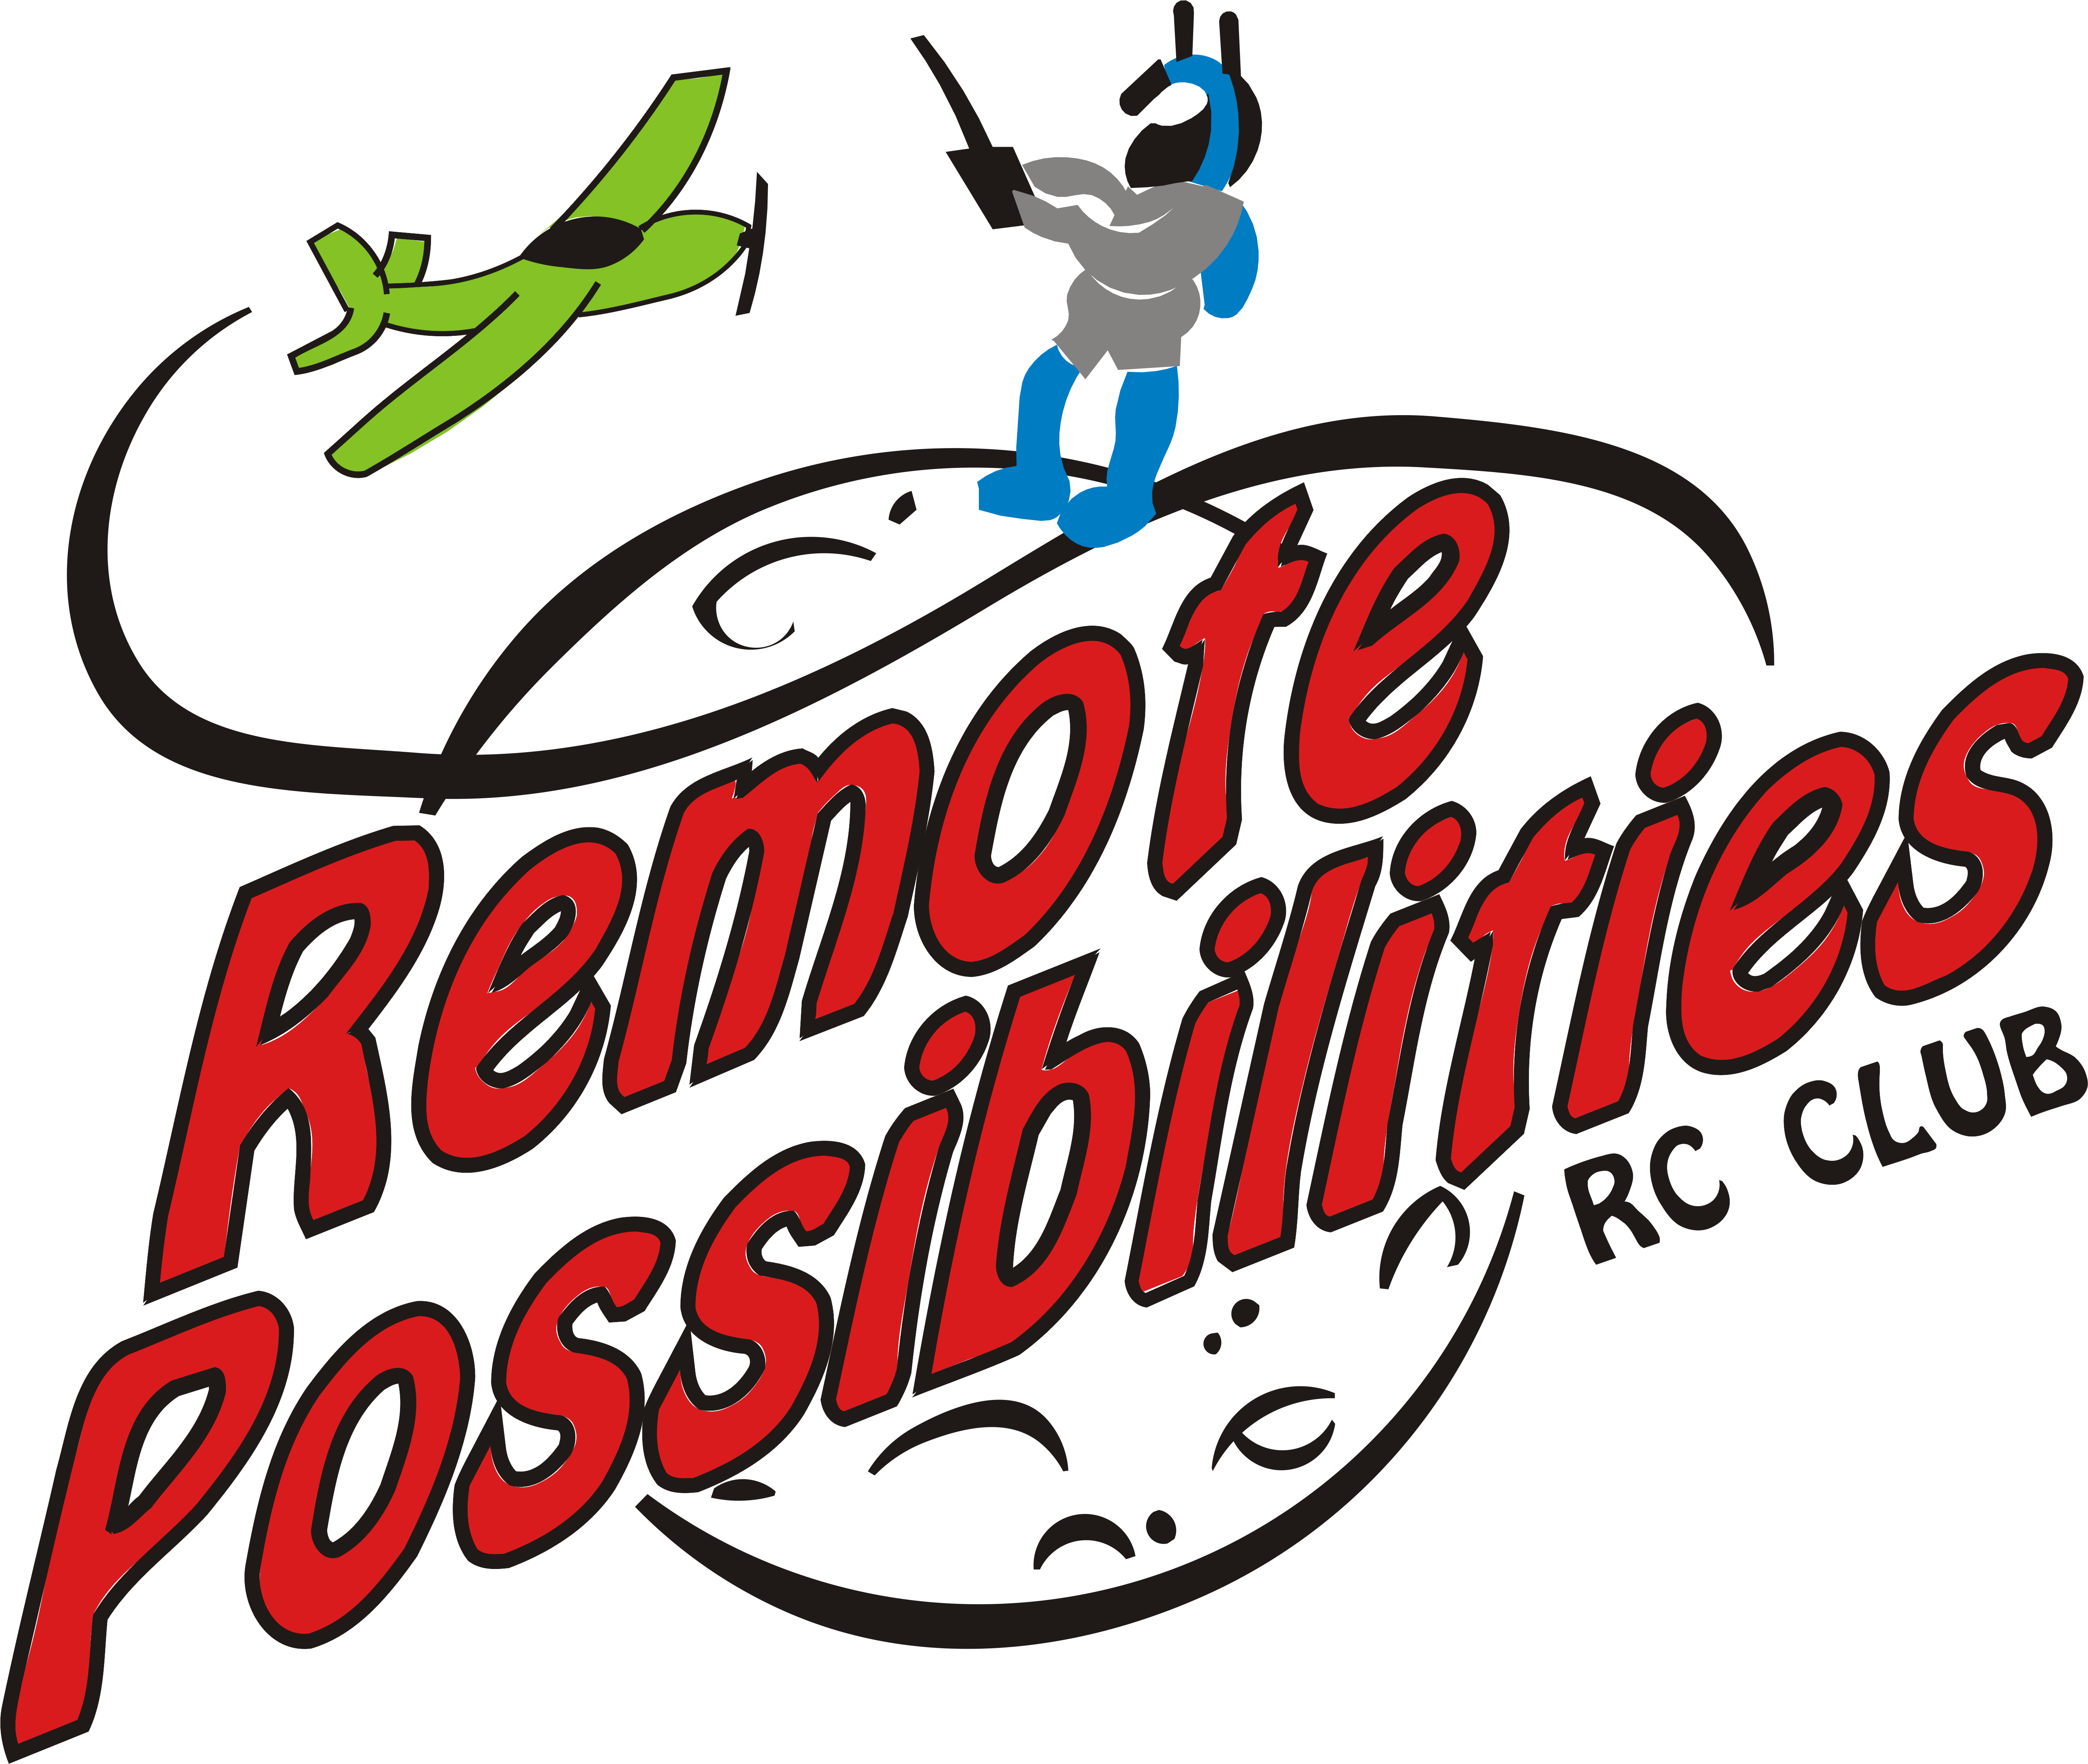 Remote Possibilities RC Club